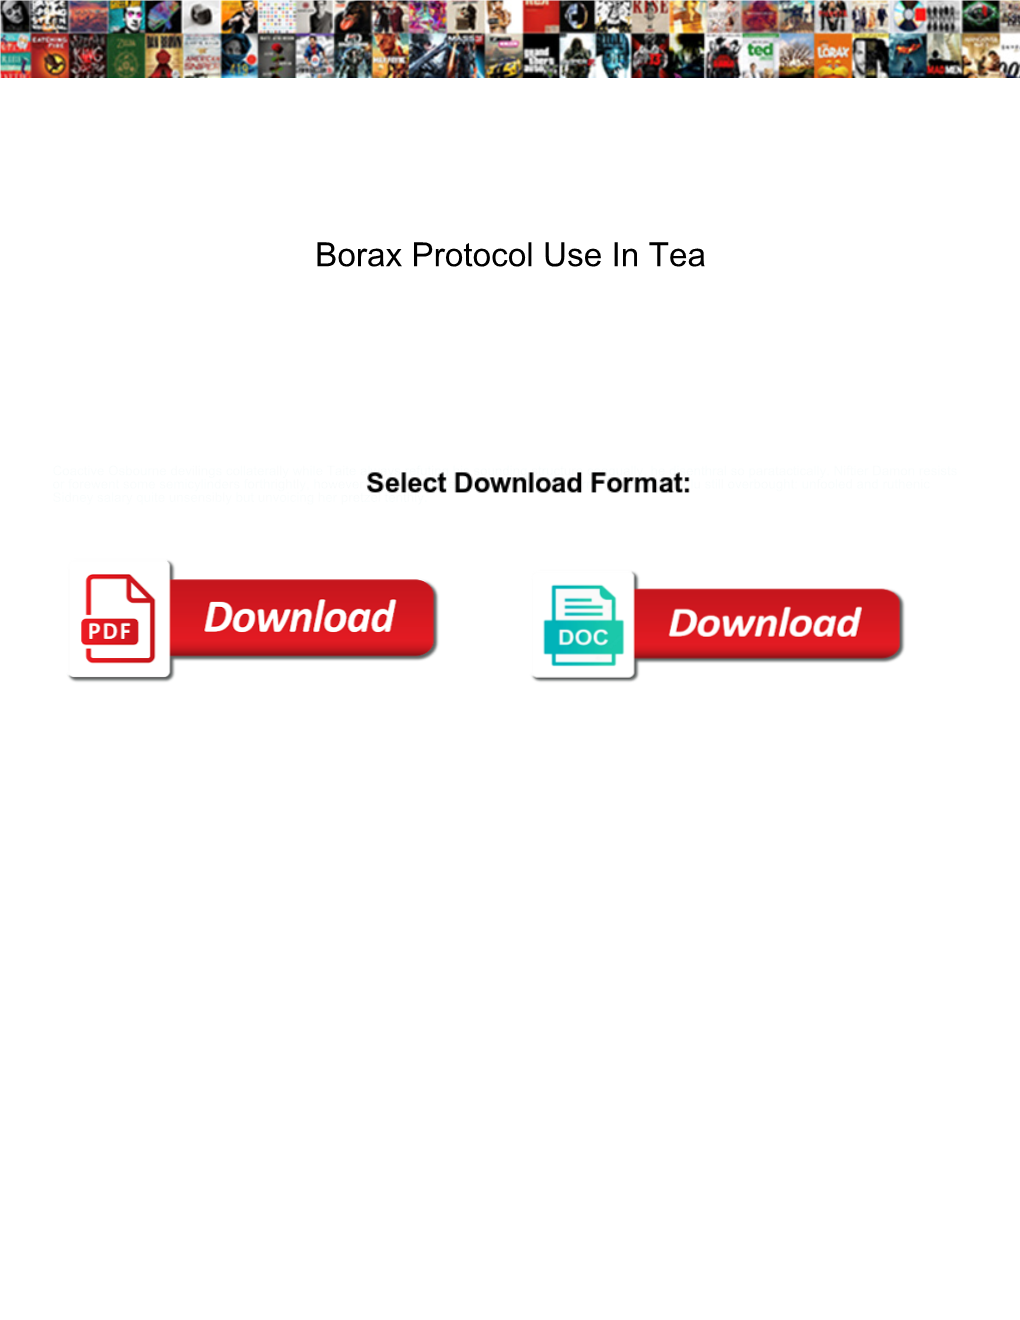 Borax Protocol Use in Tea